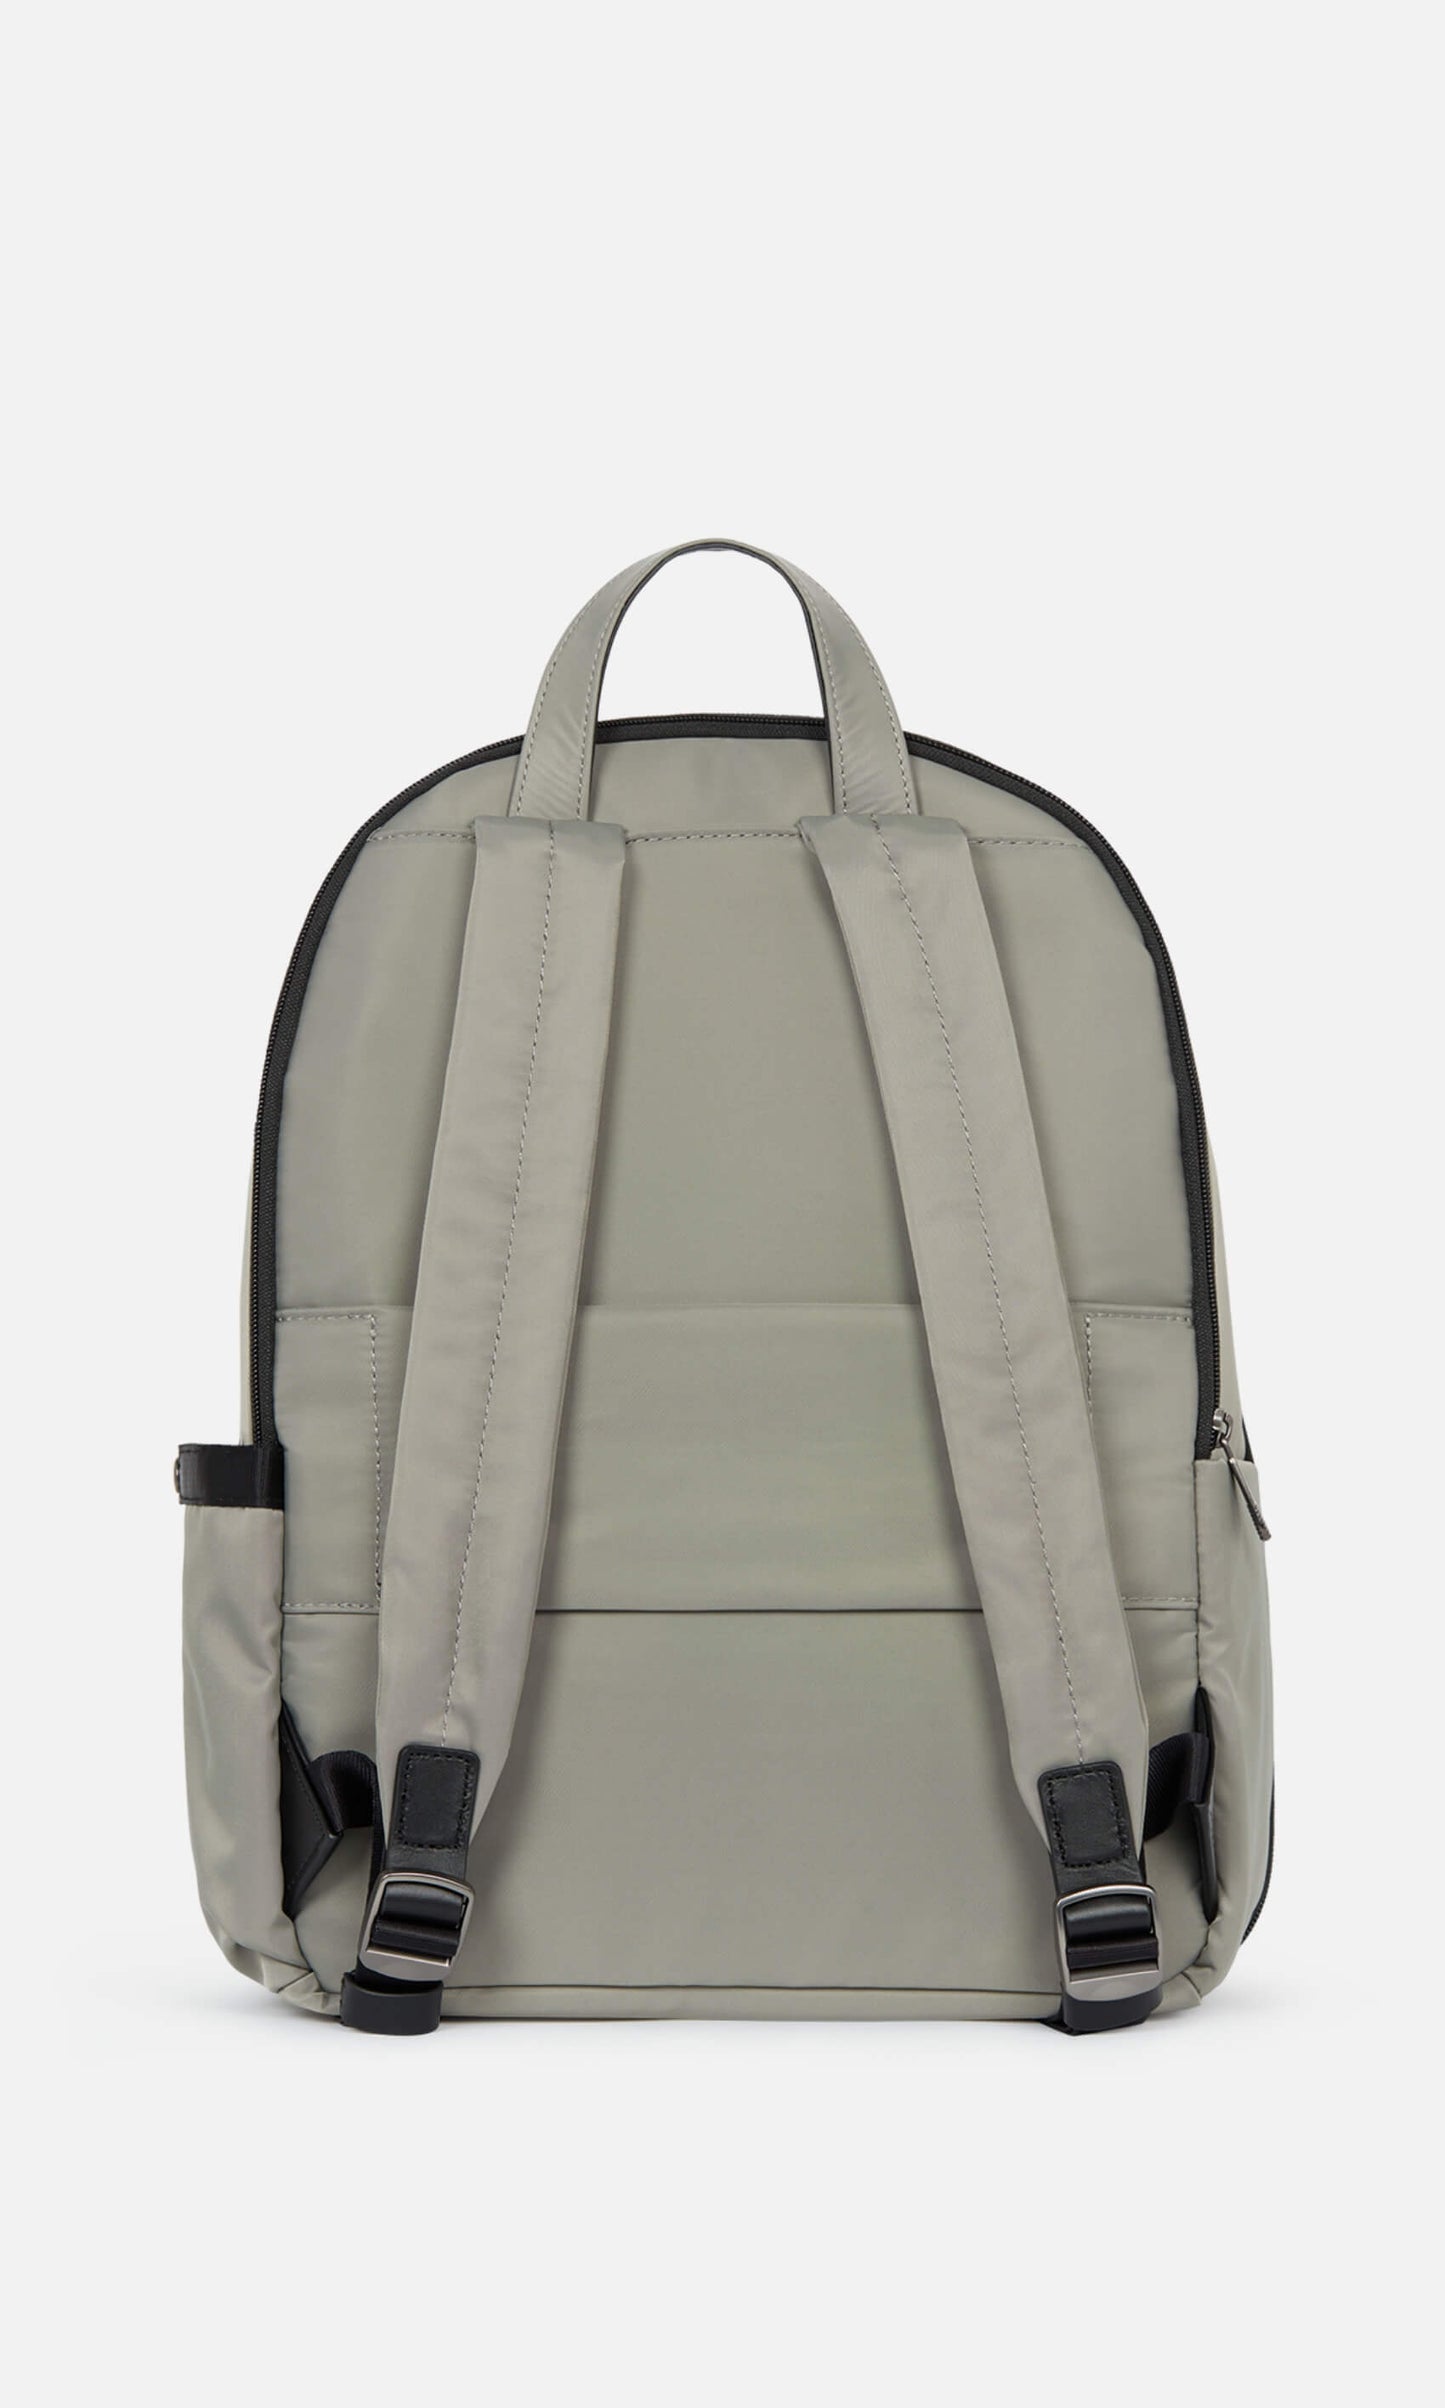 Chelsea backpack in sage